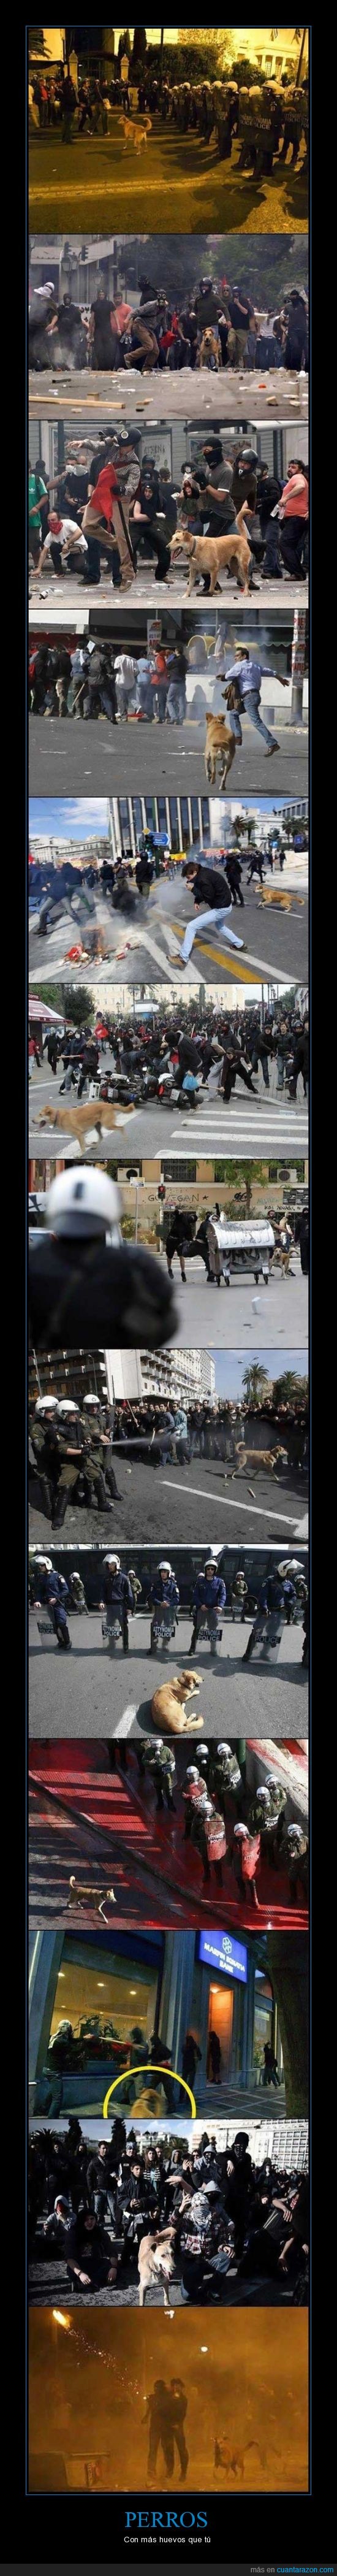 policia,riot dog,perro,cojones,huevos,protesta